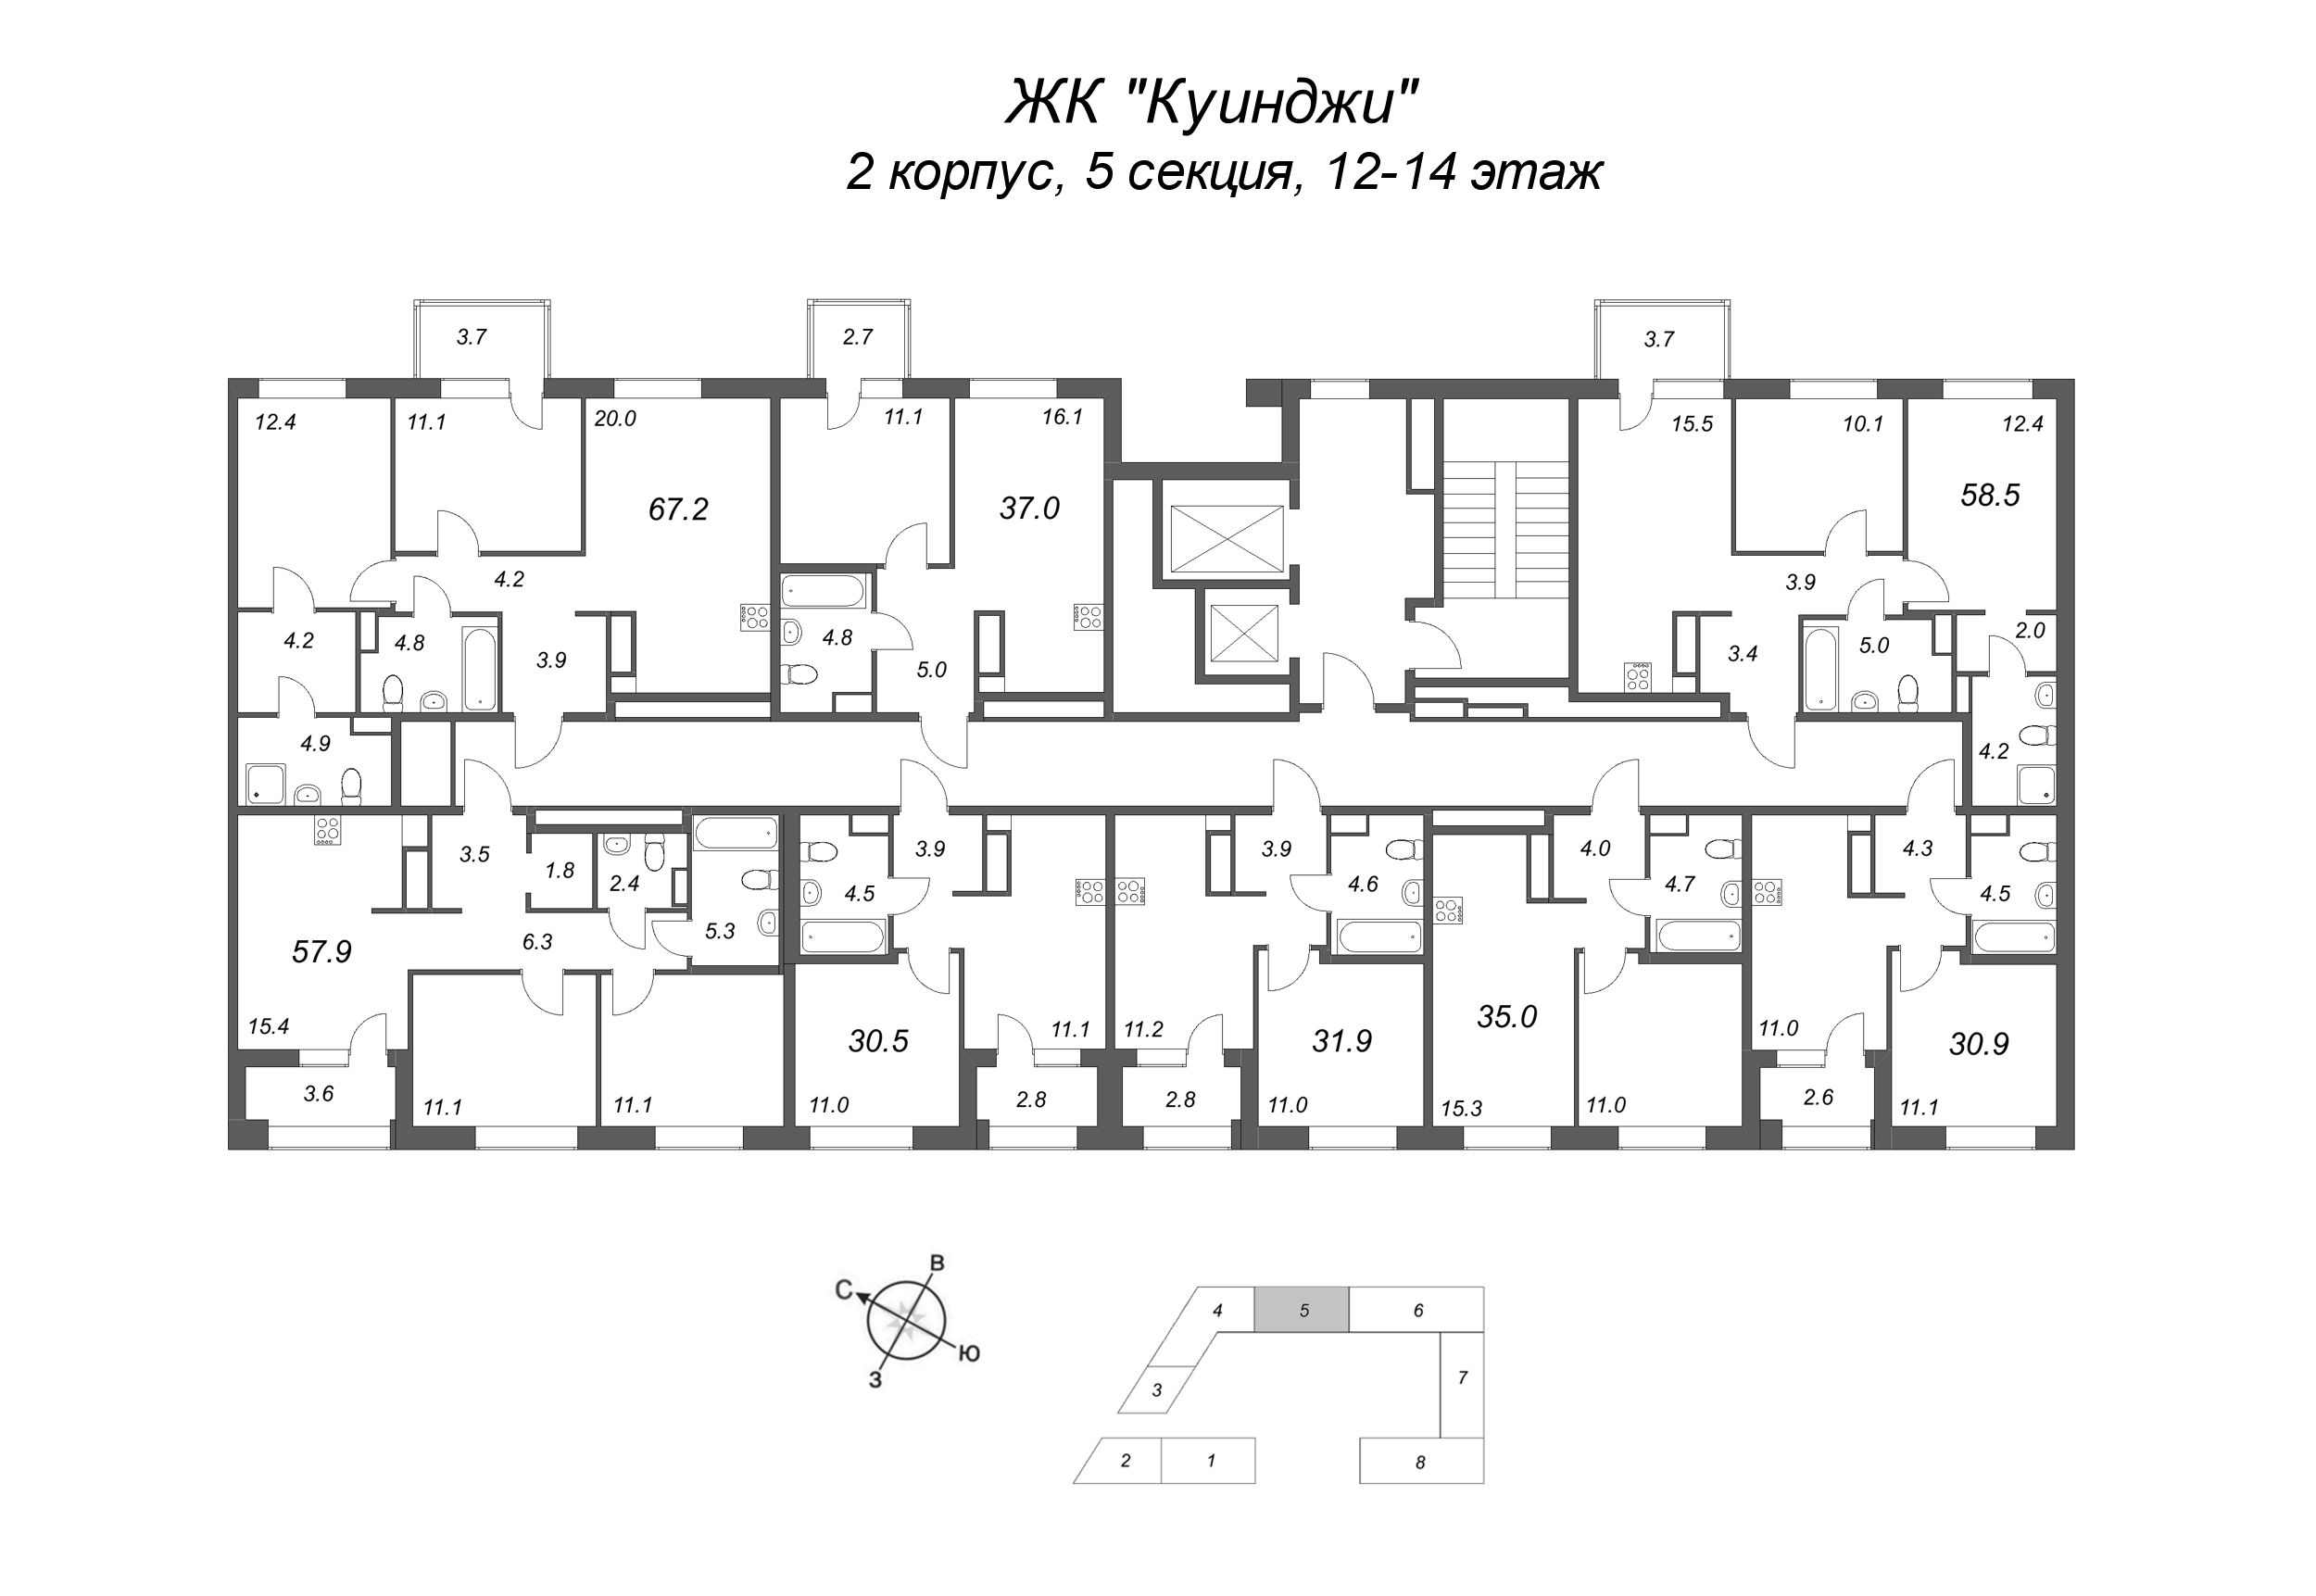 2-комнатная (Евро) квартира, 37 м² в ЖК "Куинджи" - планировка этажа